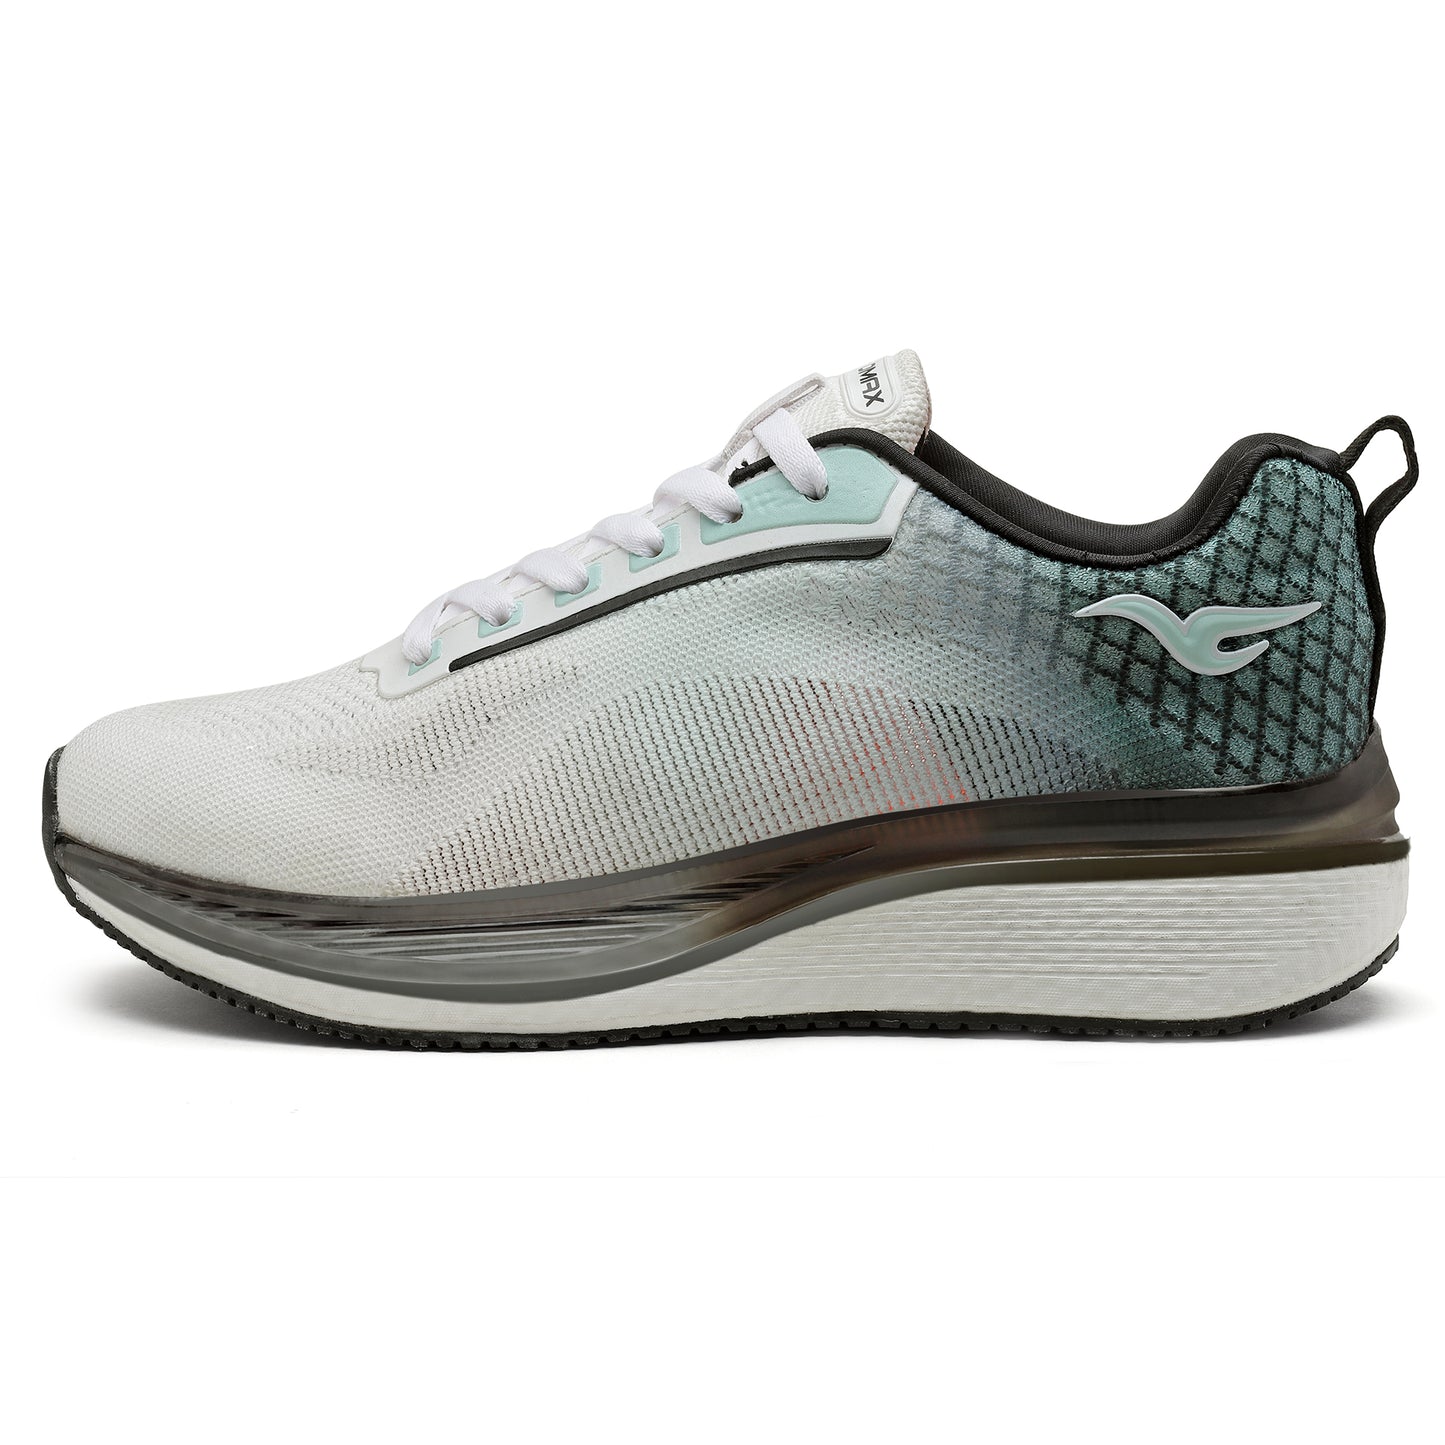 Vomax Sports Trenz-01 Running Walking Sports Shoes for Men's